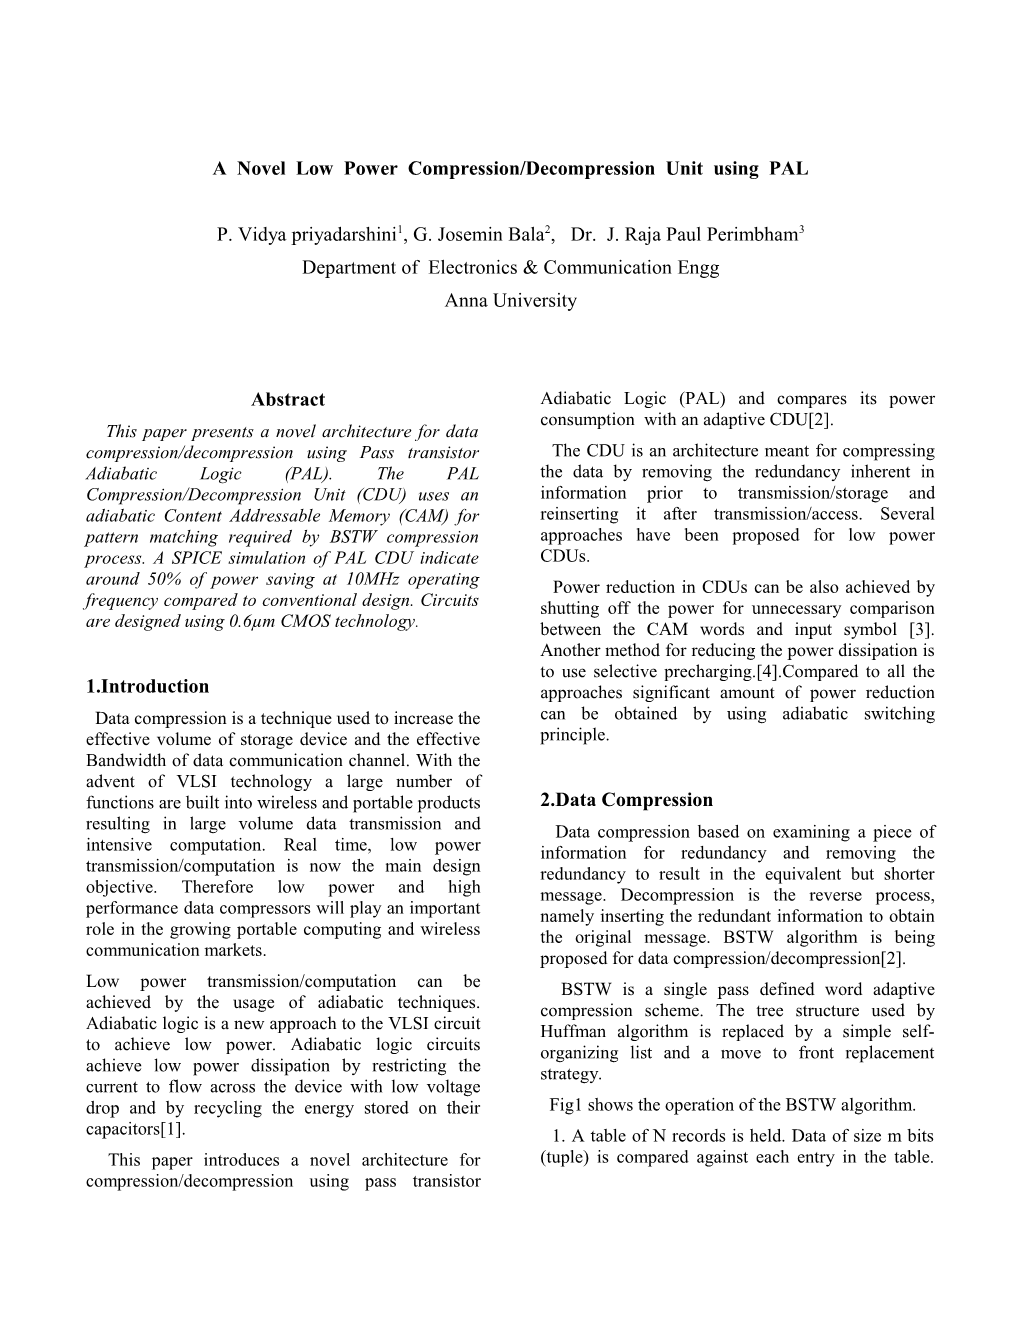 A Novel Low Power Compression/Decompression Unit Using PAL